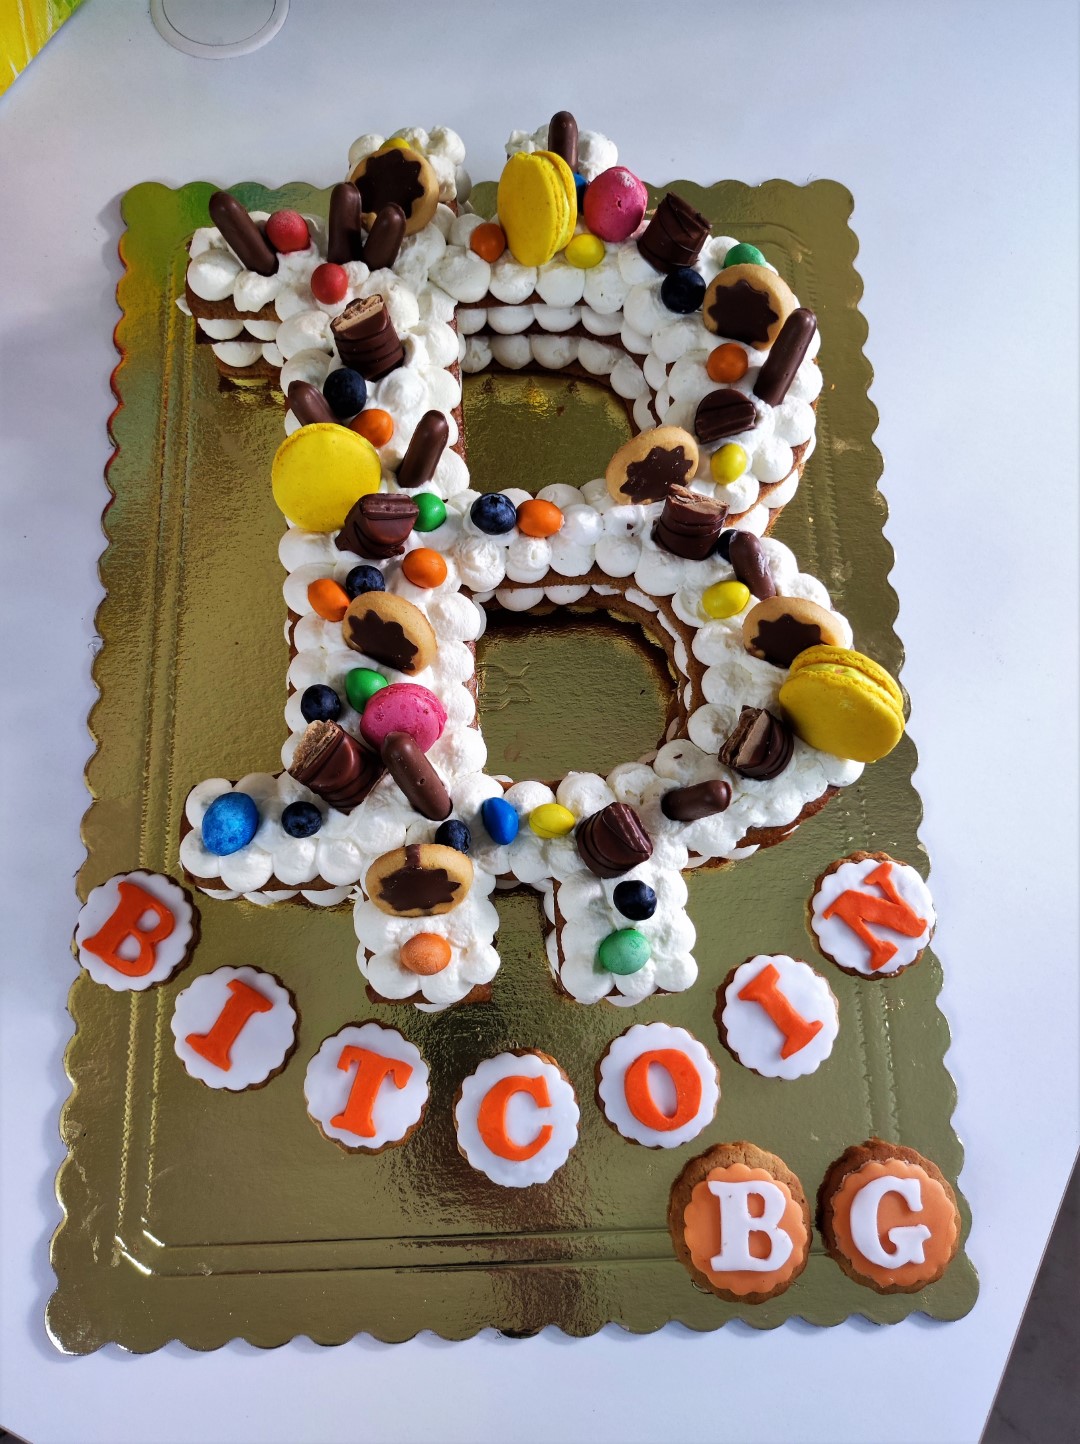 BitcoinBG-Birthday-Cake-01.jpg